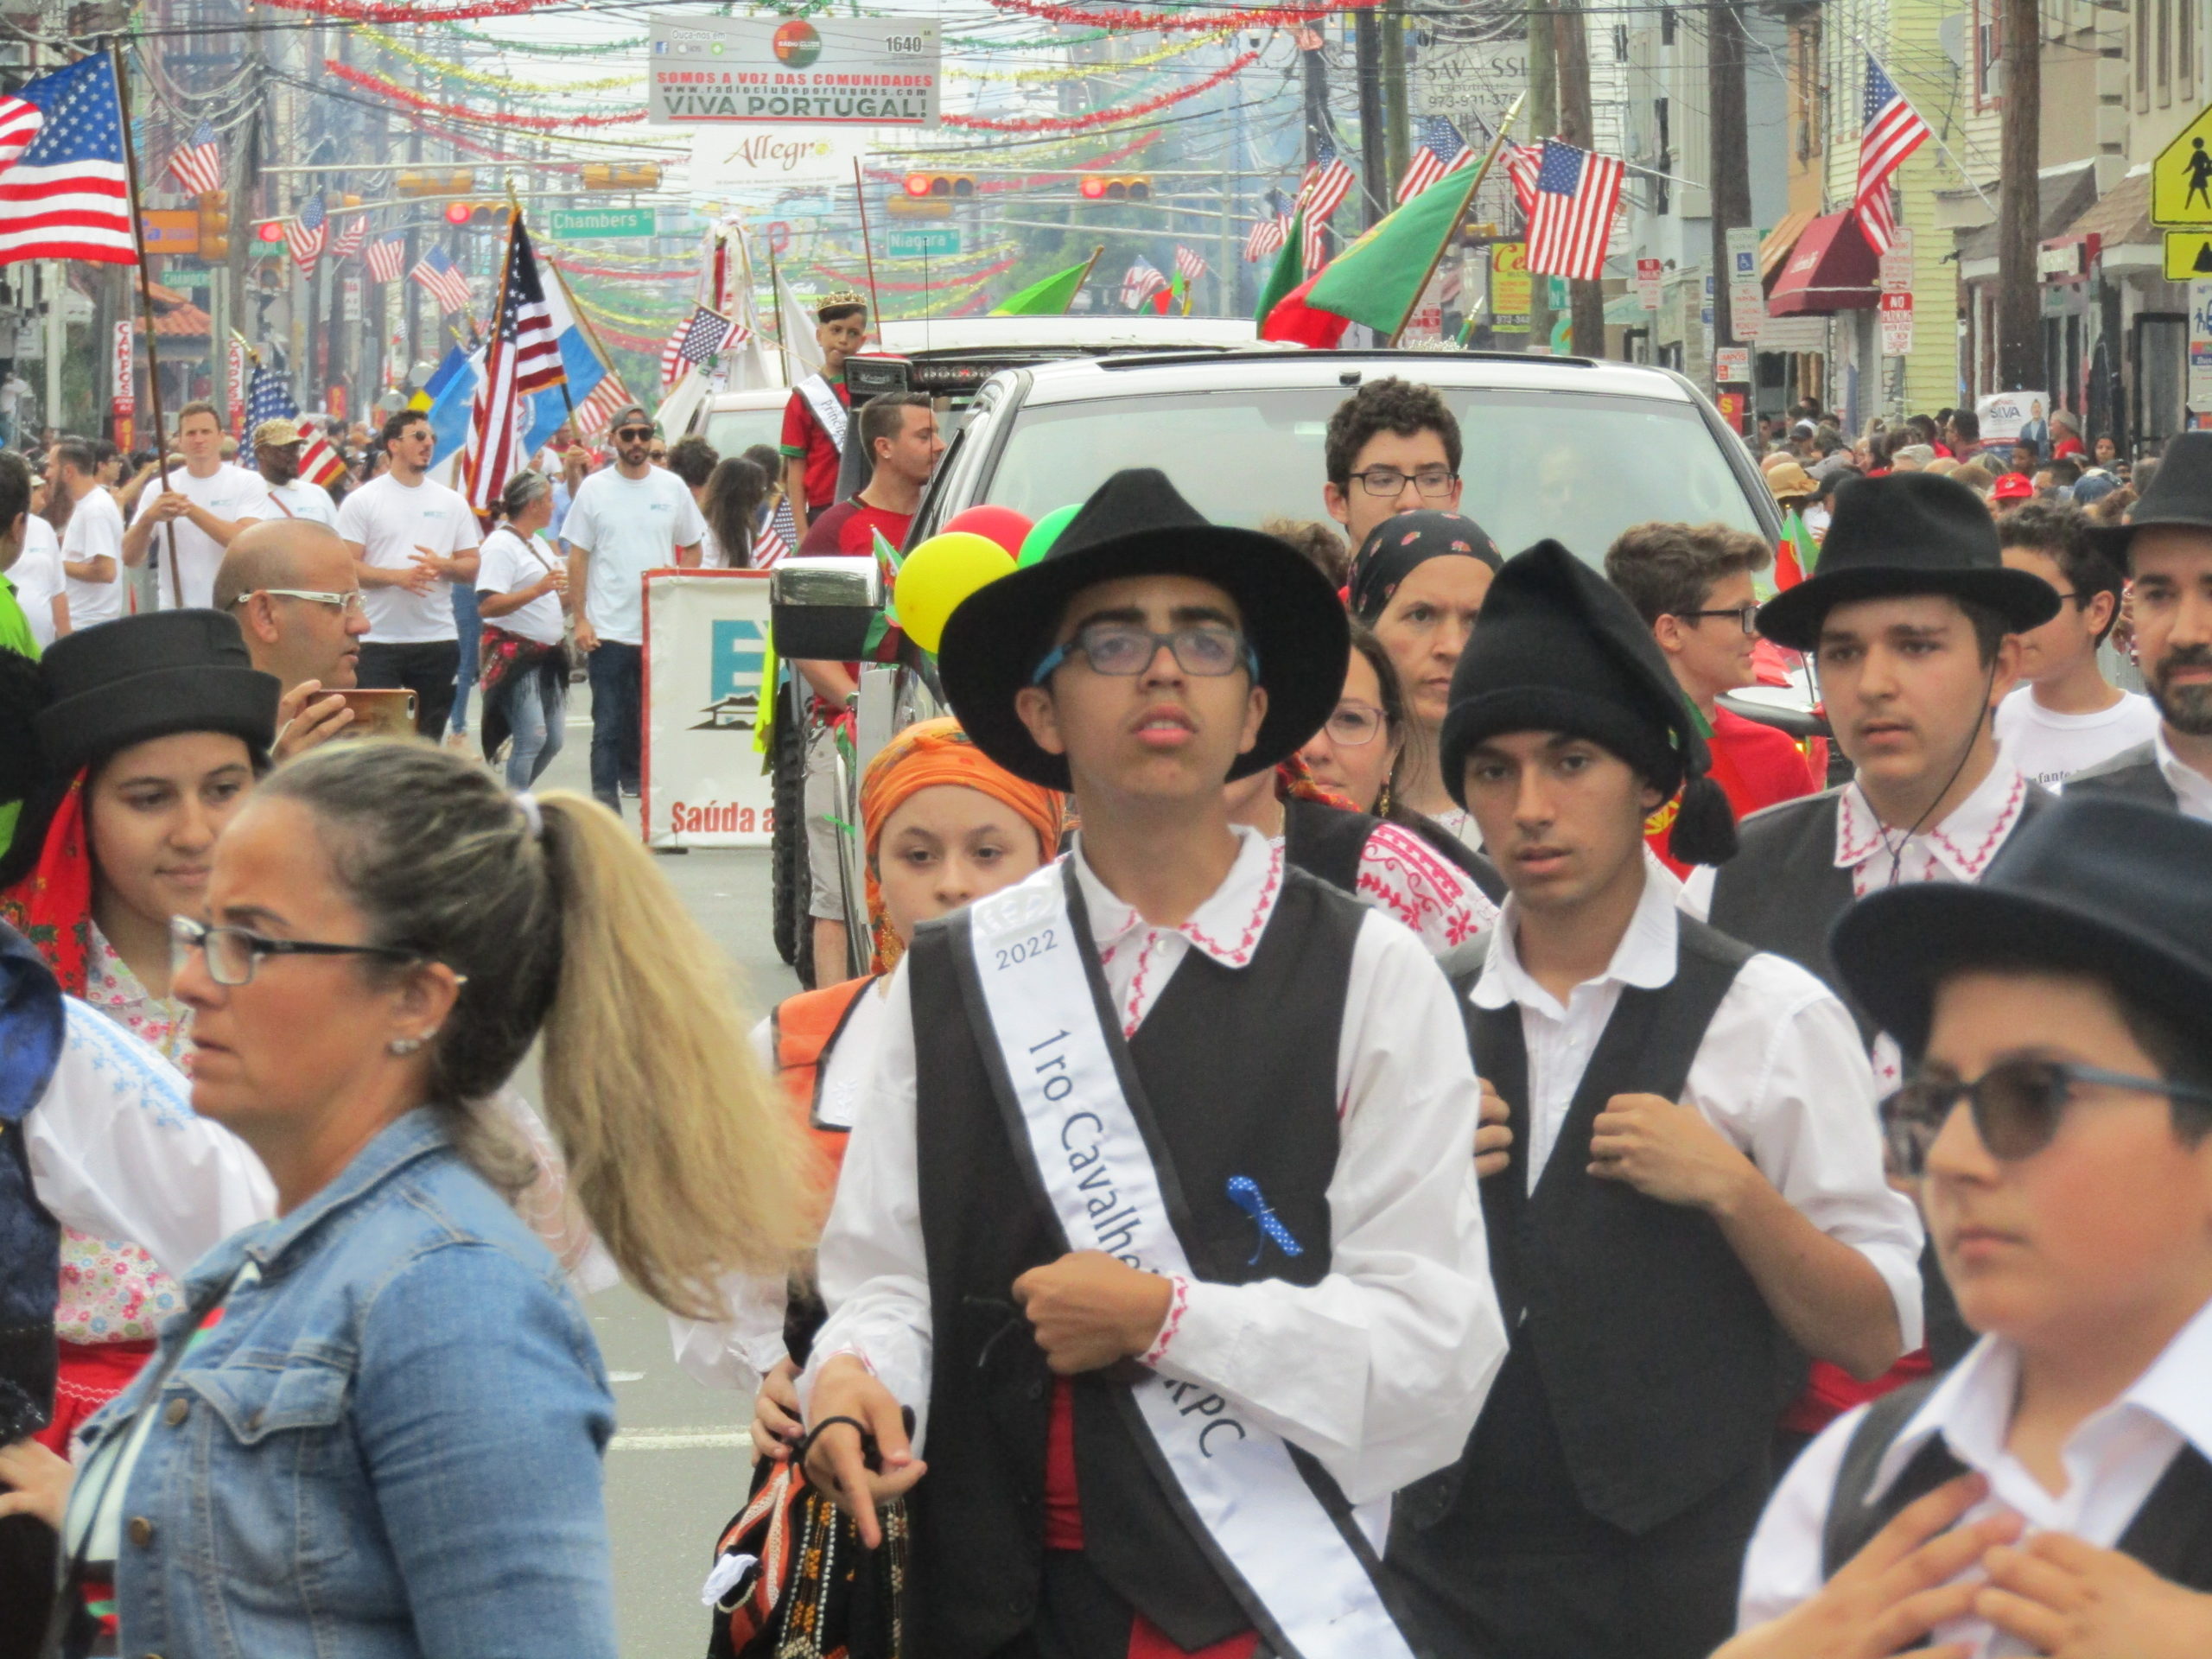 Pride and patriotism at the Portugal Day Parade in Newark, N.J